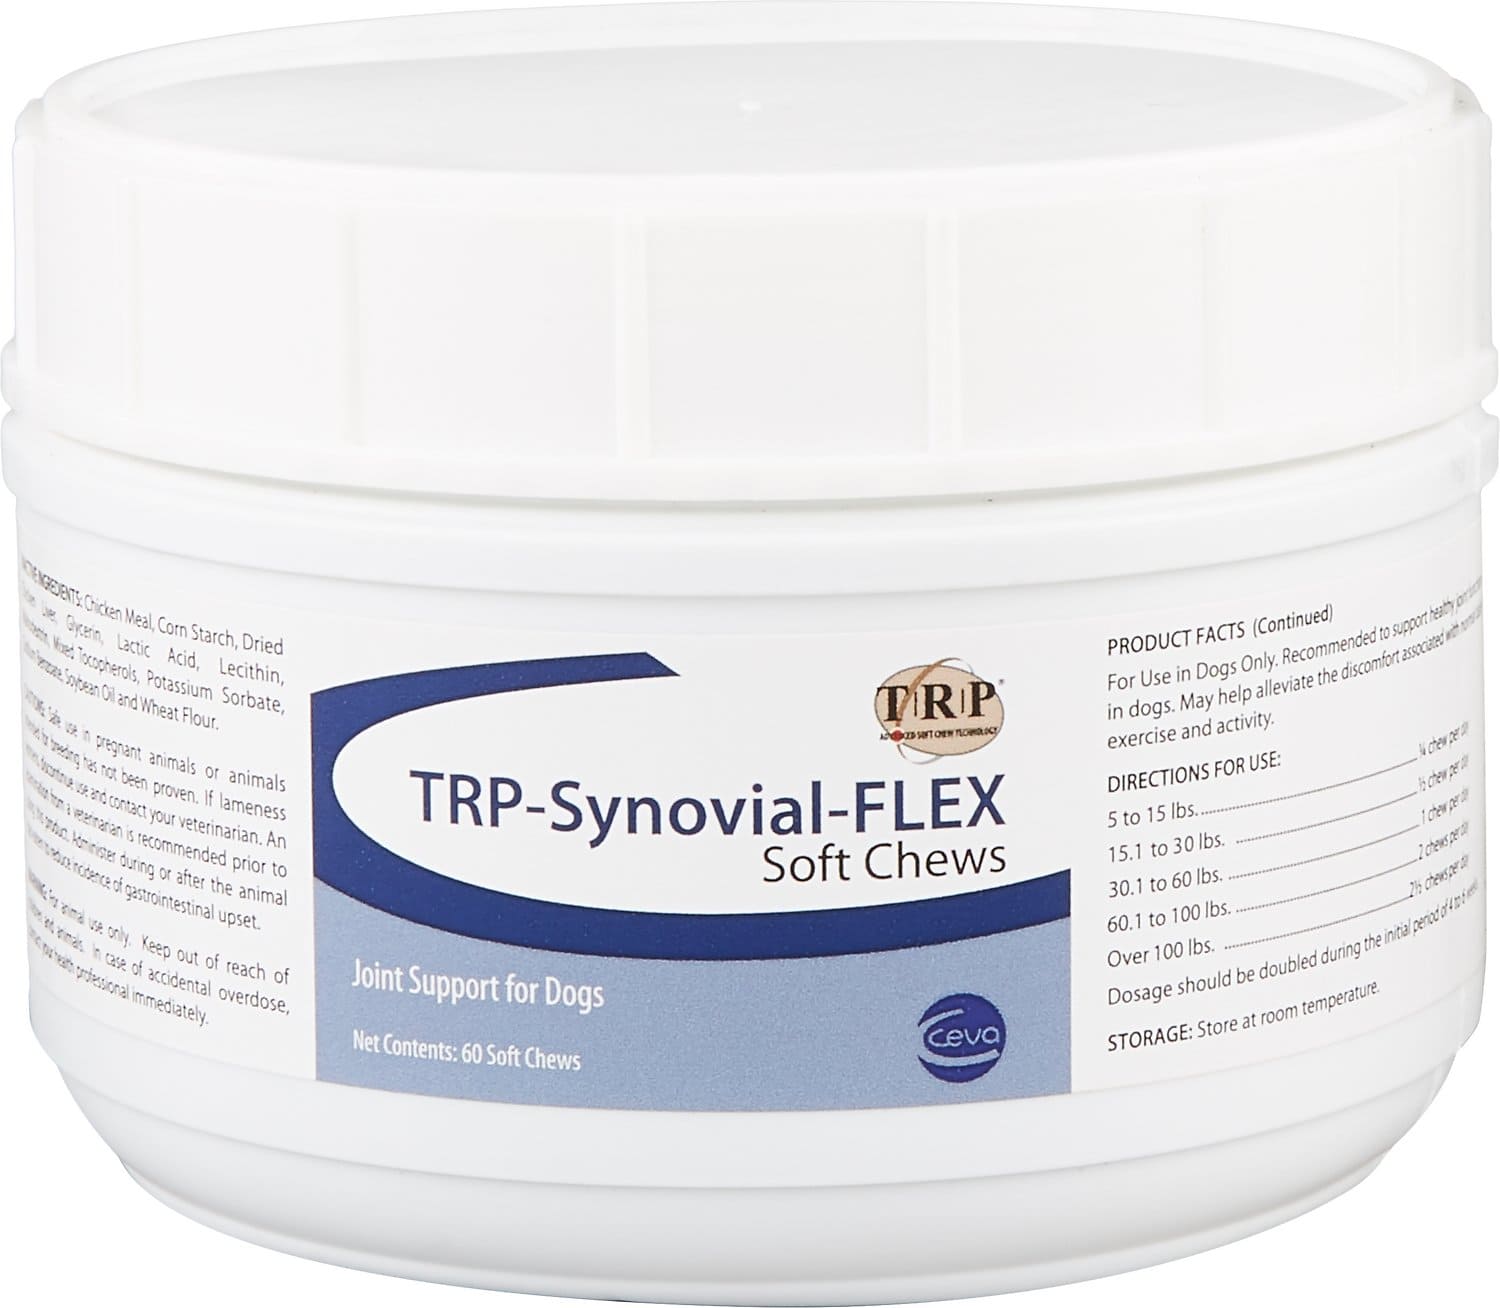 TRP-Synovial-Flex